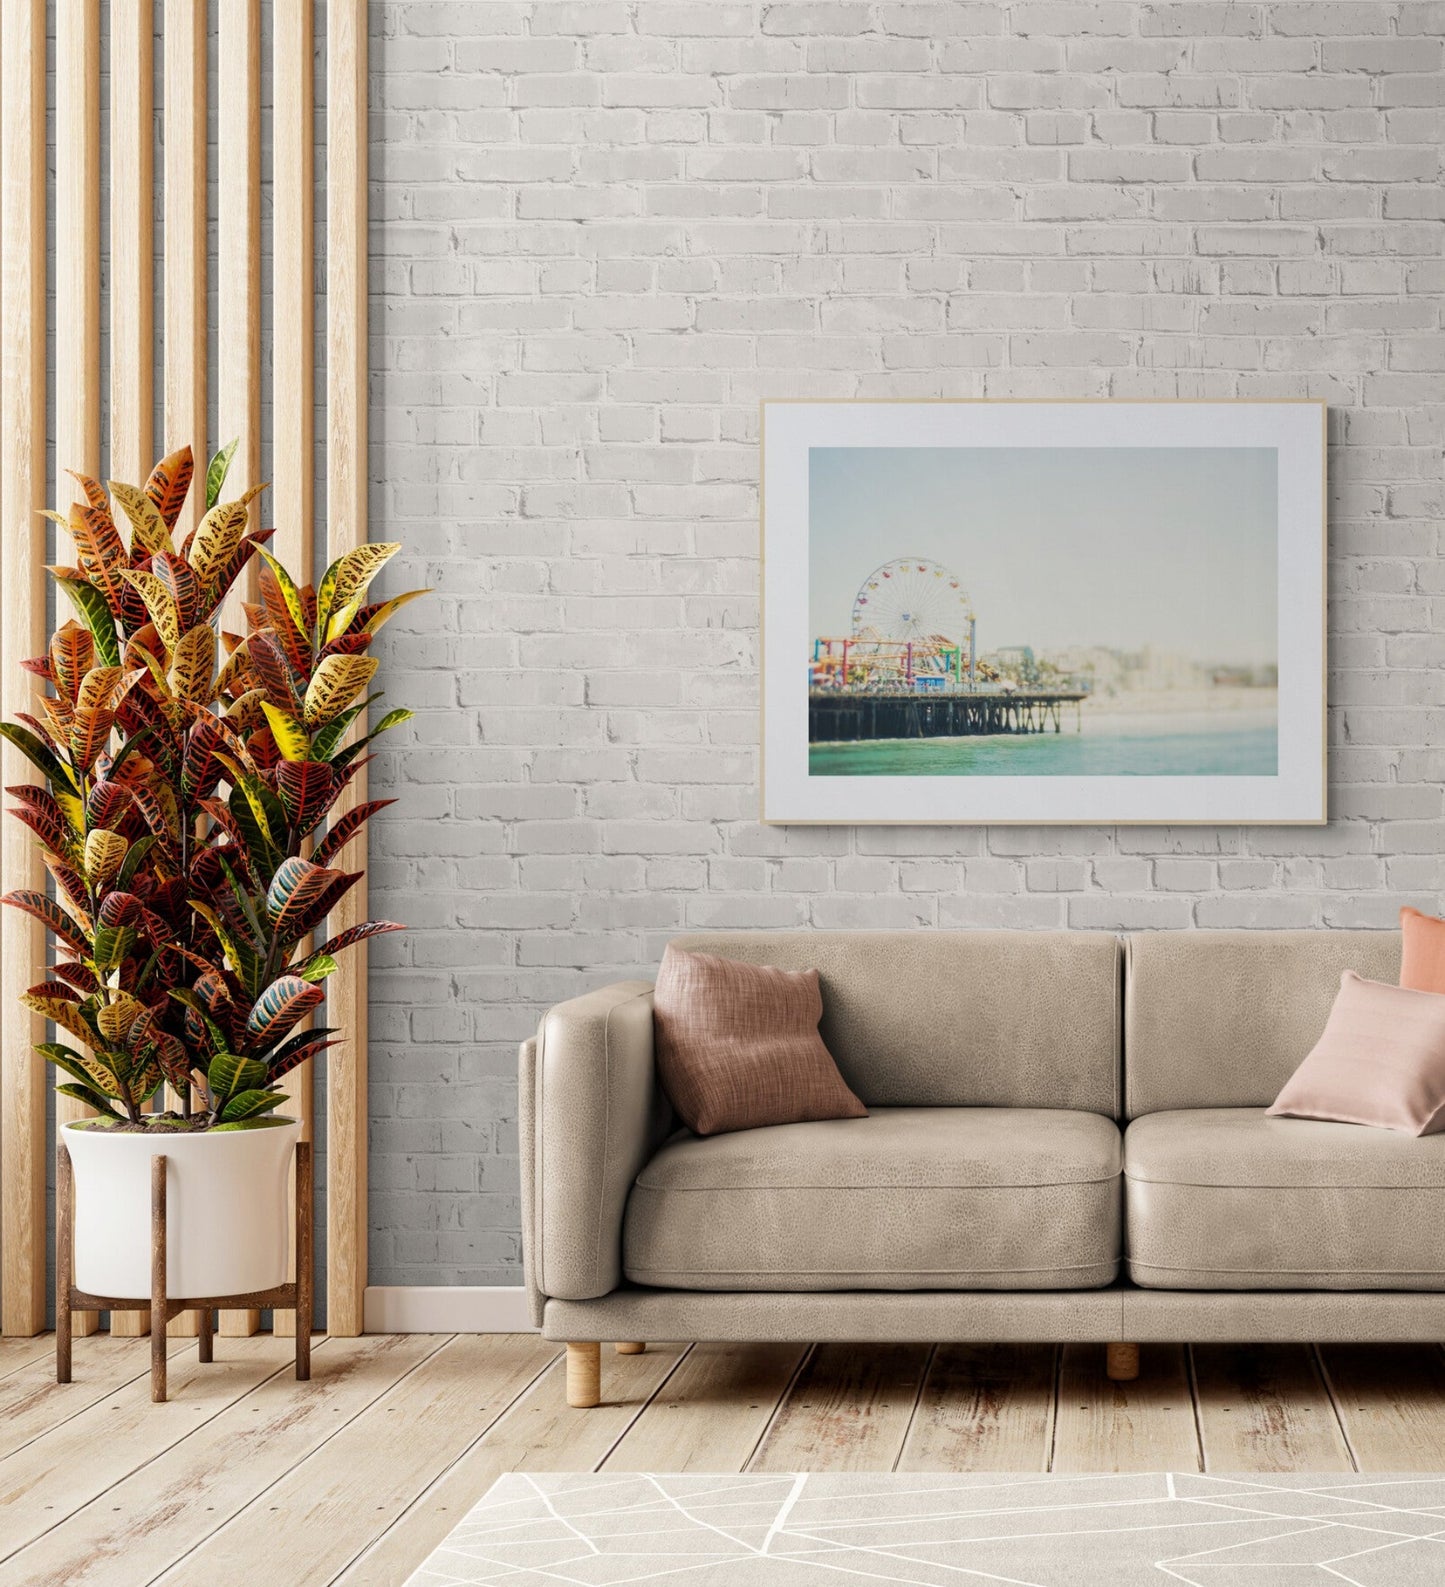 Santa Monica Beach Photograph Print as Living Room Wall Art